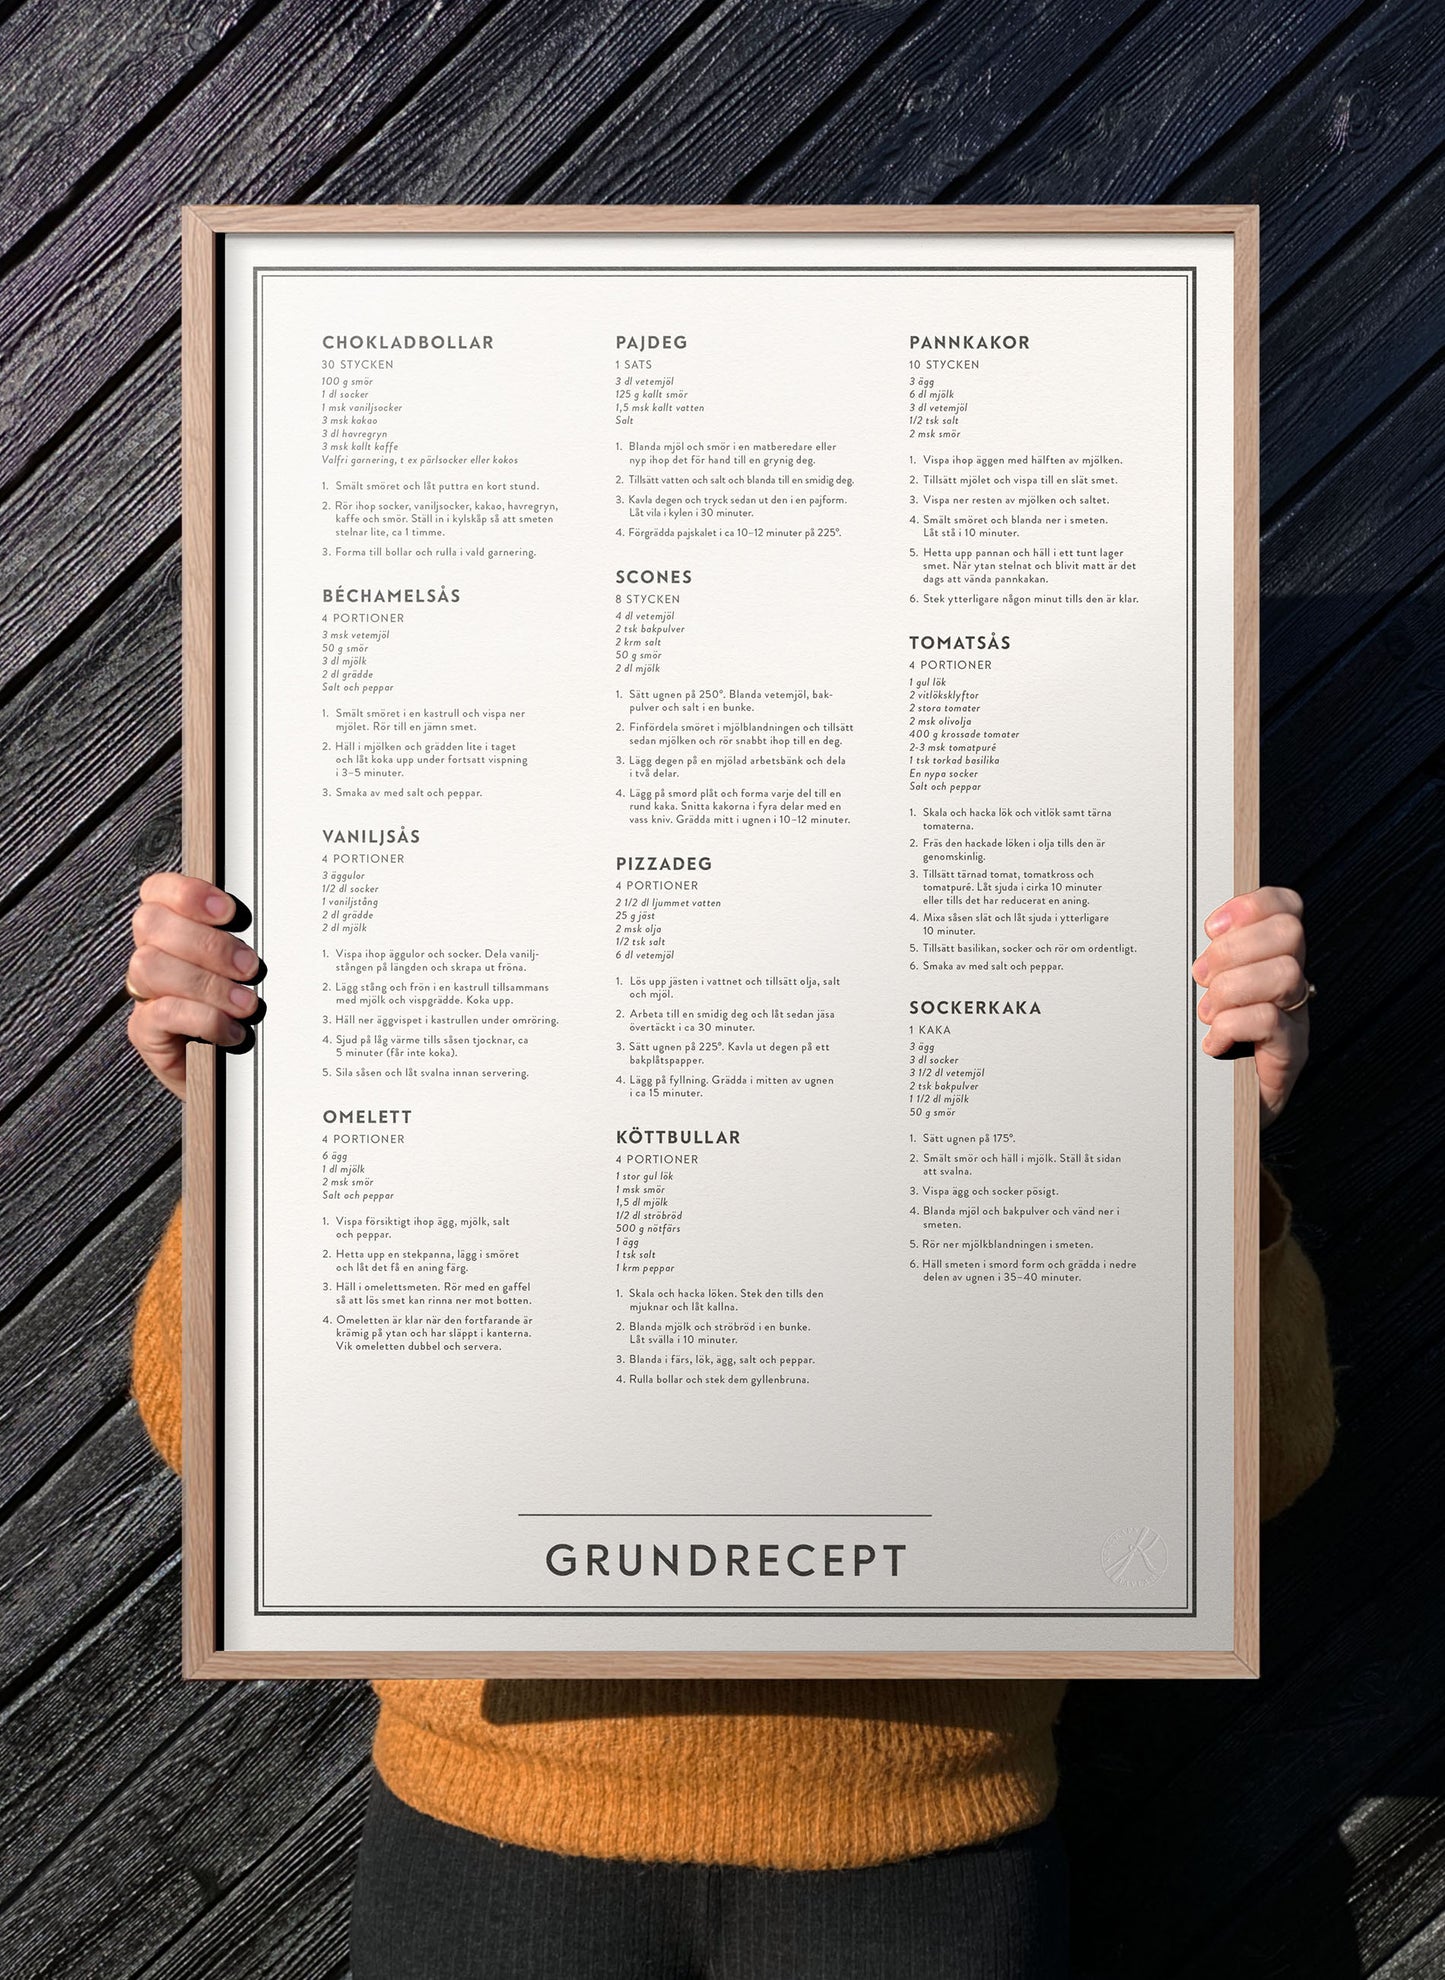 Grundrecept - Basic Recipes in Swedish